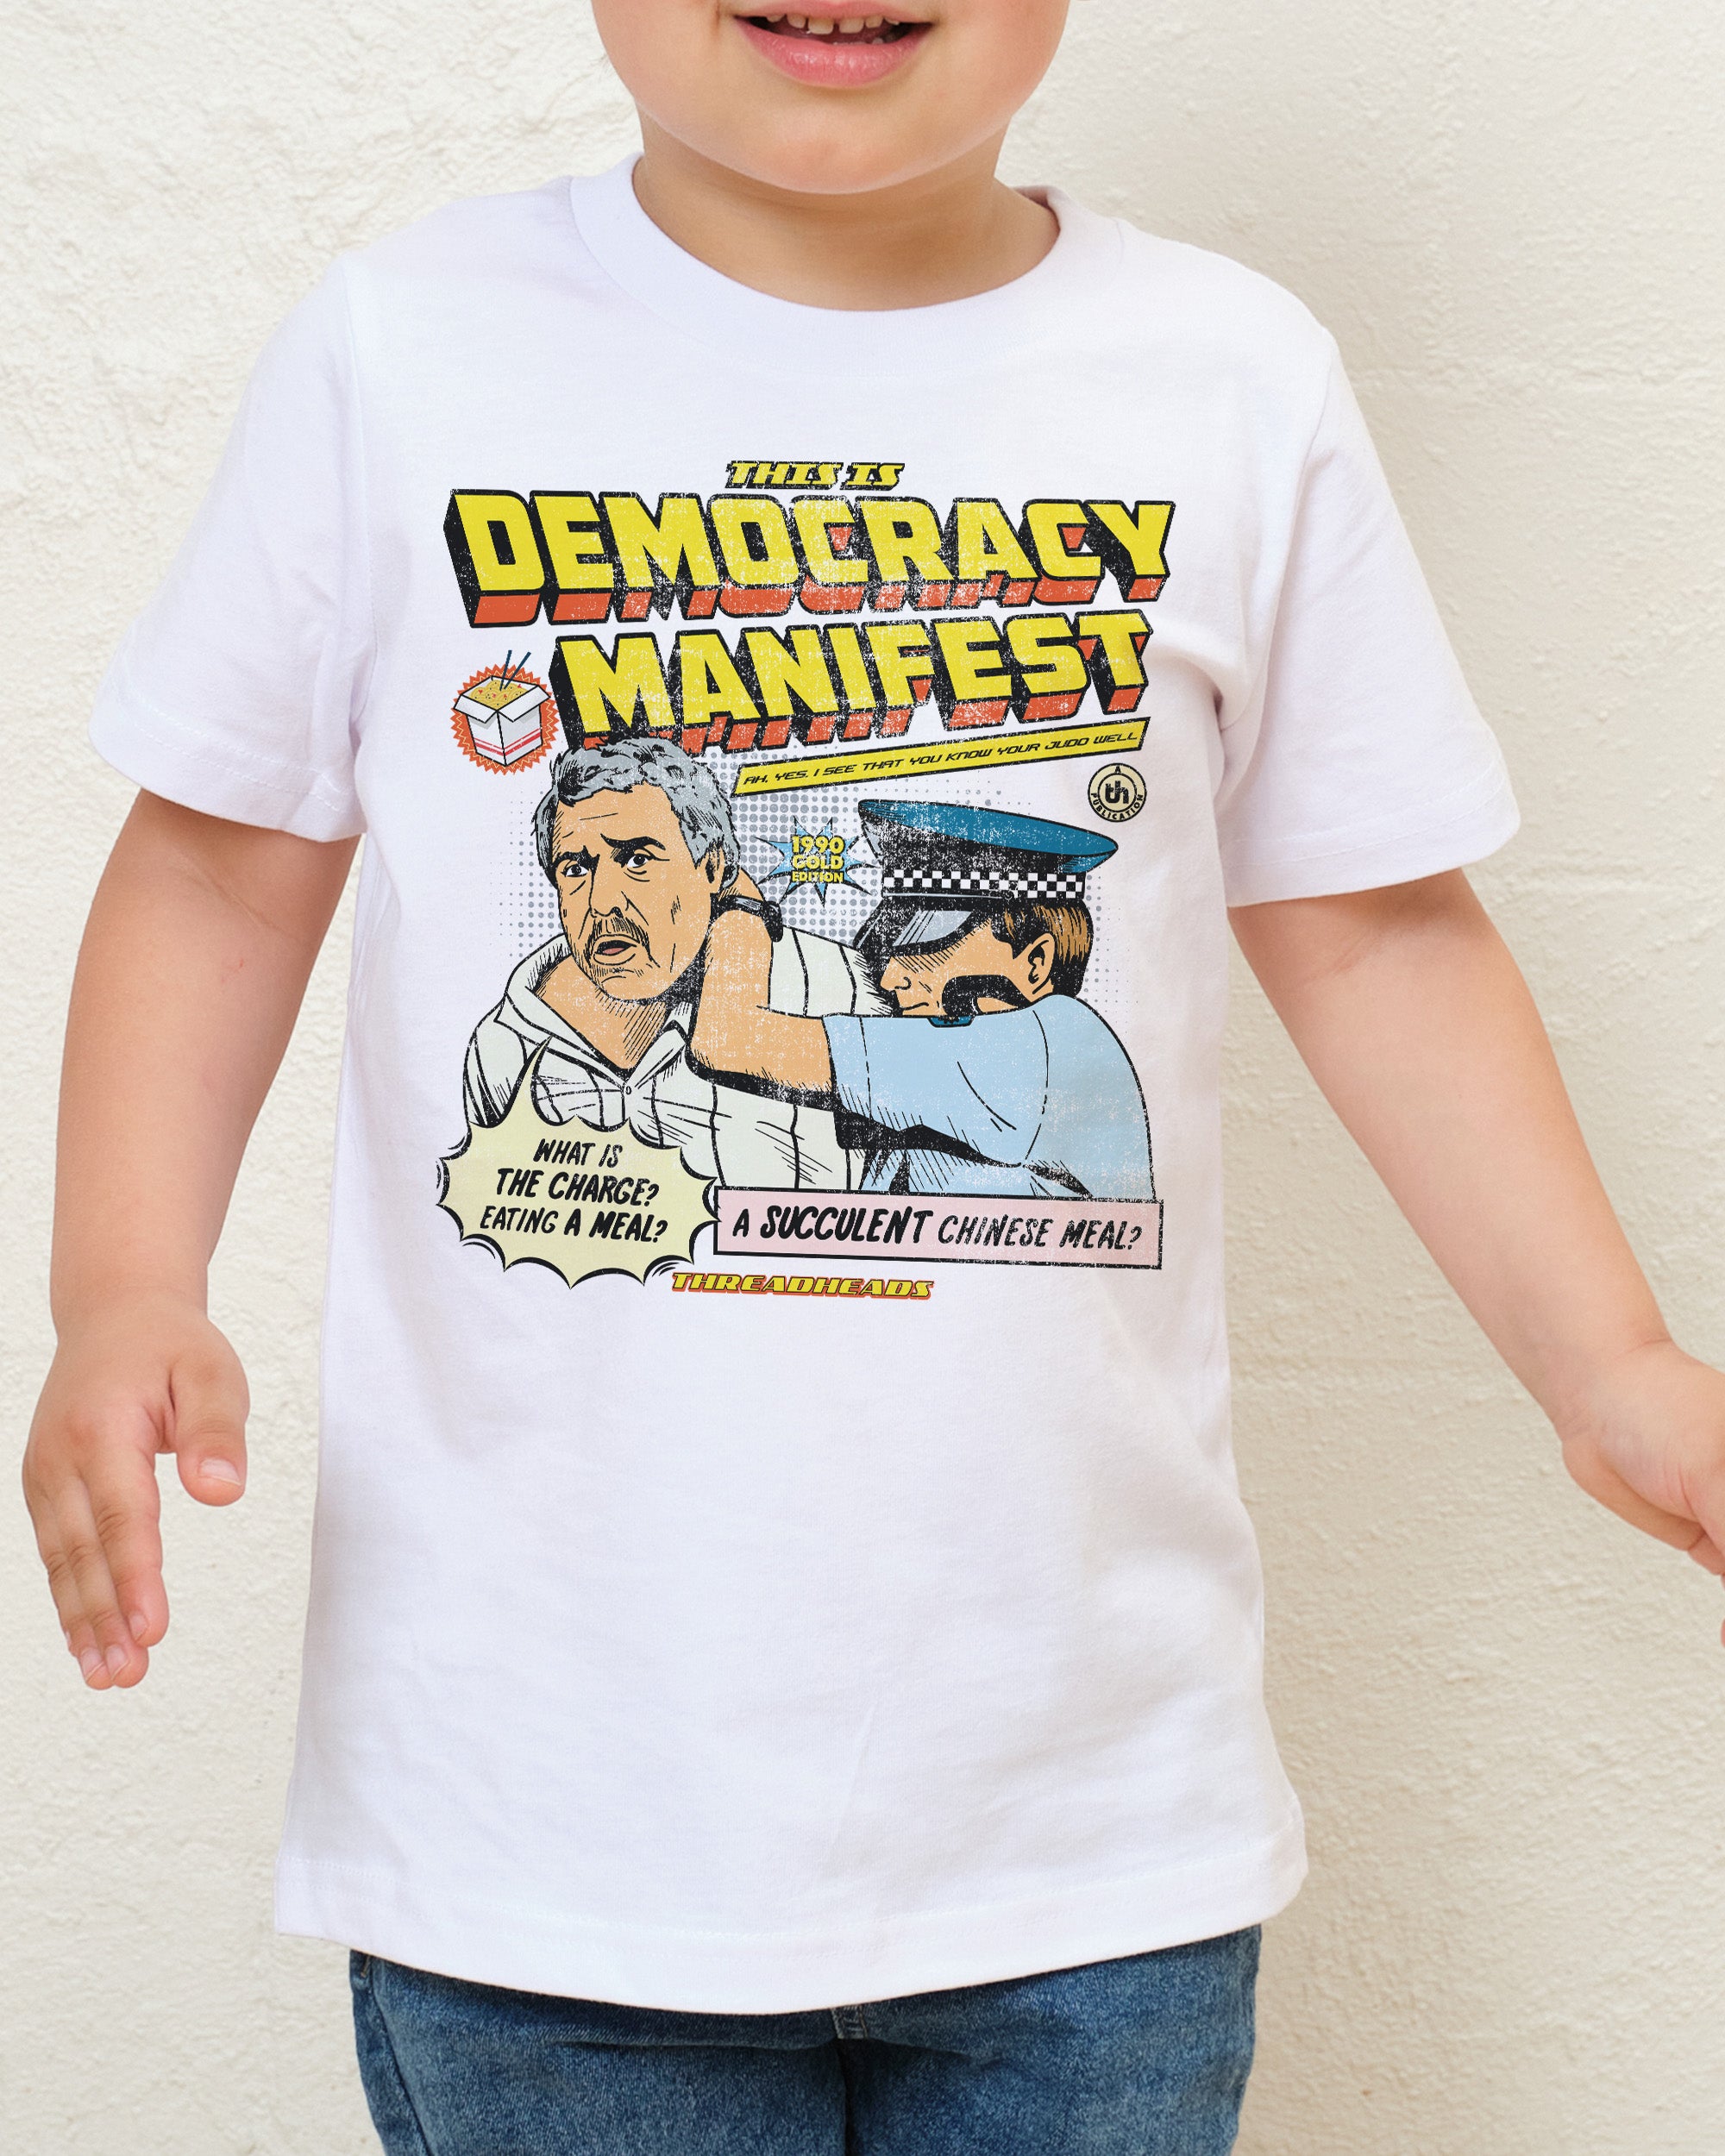 This is Democracy Manifest Kids T-Shirt